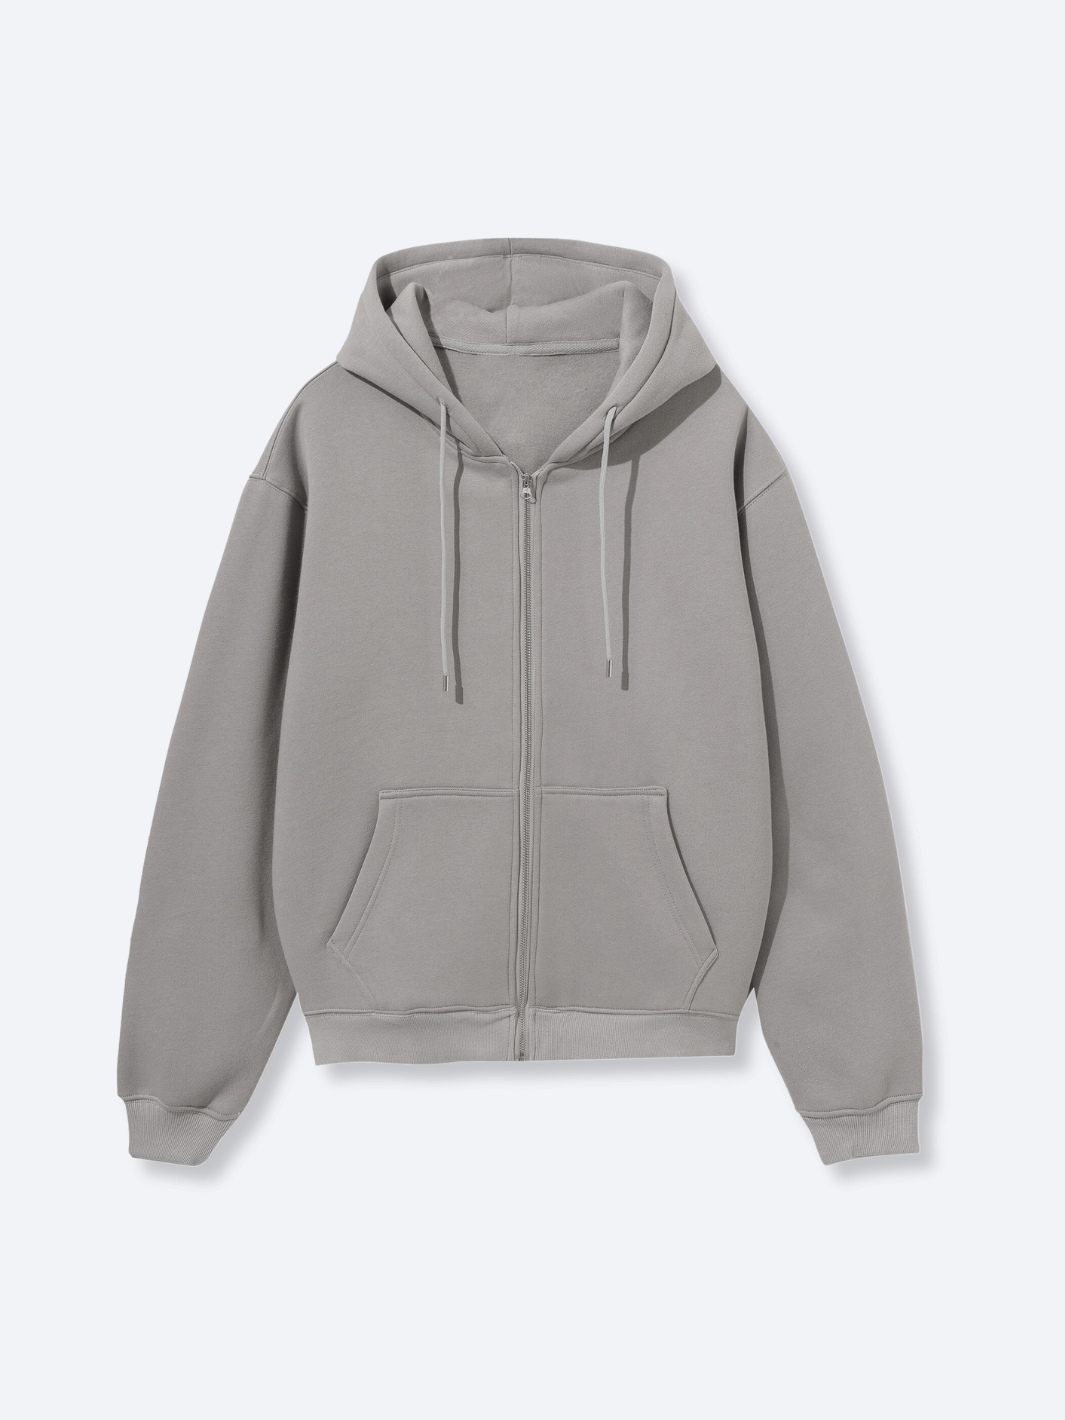 "TO WHOM IT MAY CONCERN" 2.0 zip-up hoodie - stone grey